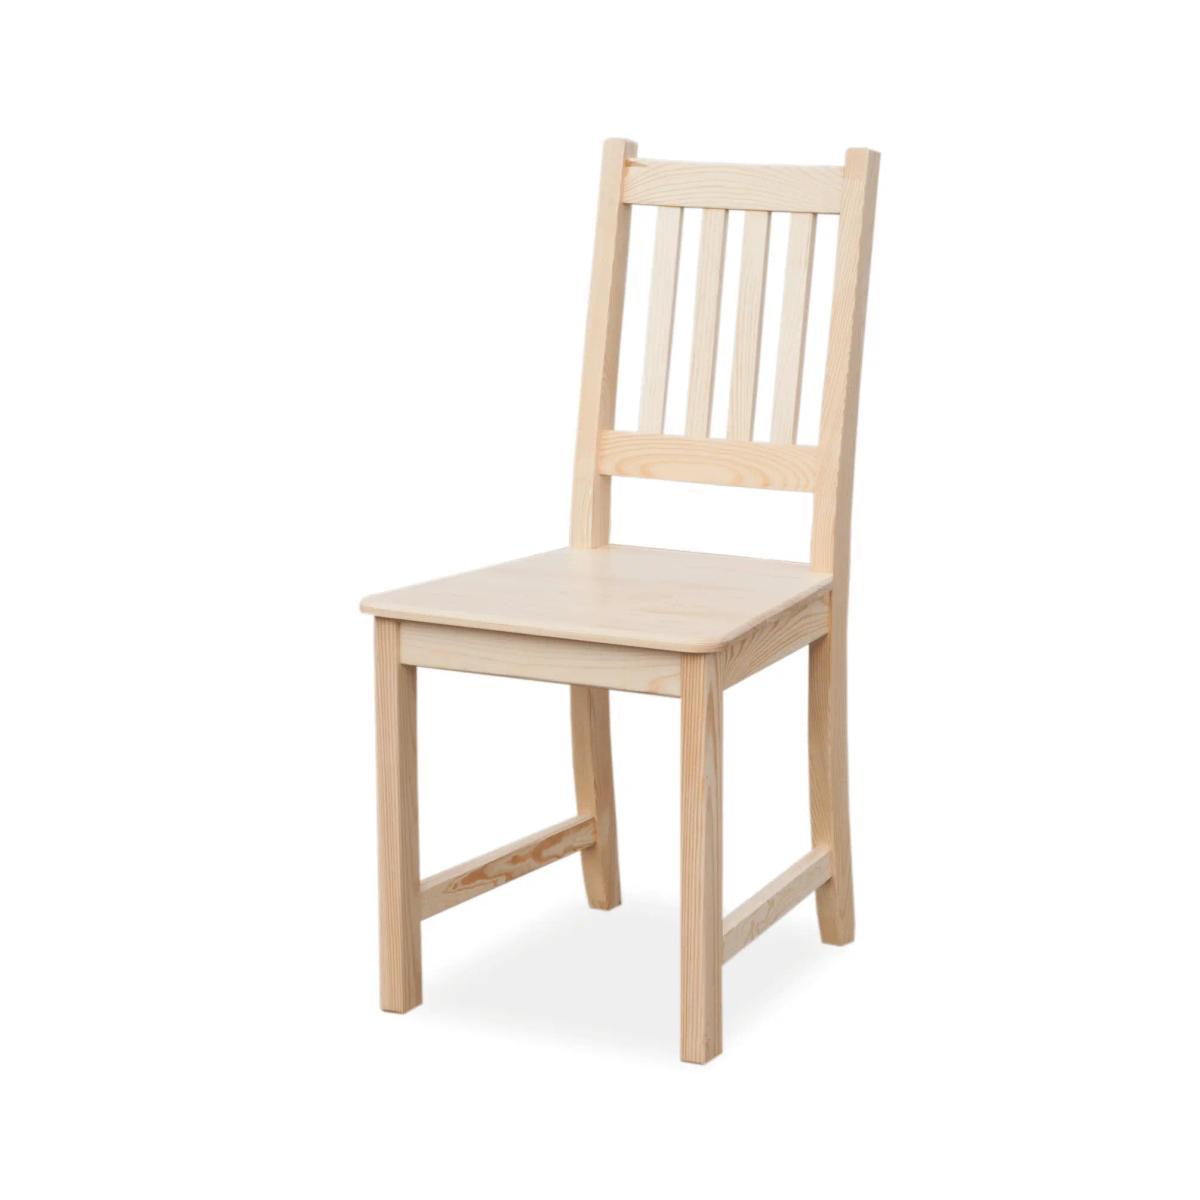 Krzesło drewniane SWC-110 49x87x62 cm do kuchni jadalni sosna naturalne 0 Full Screen